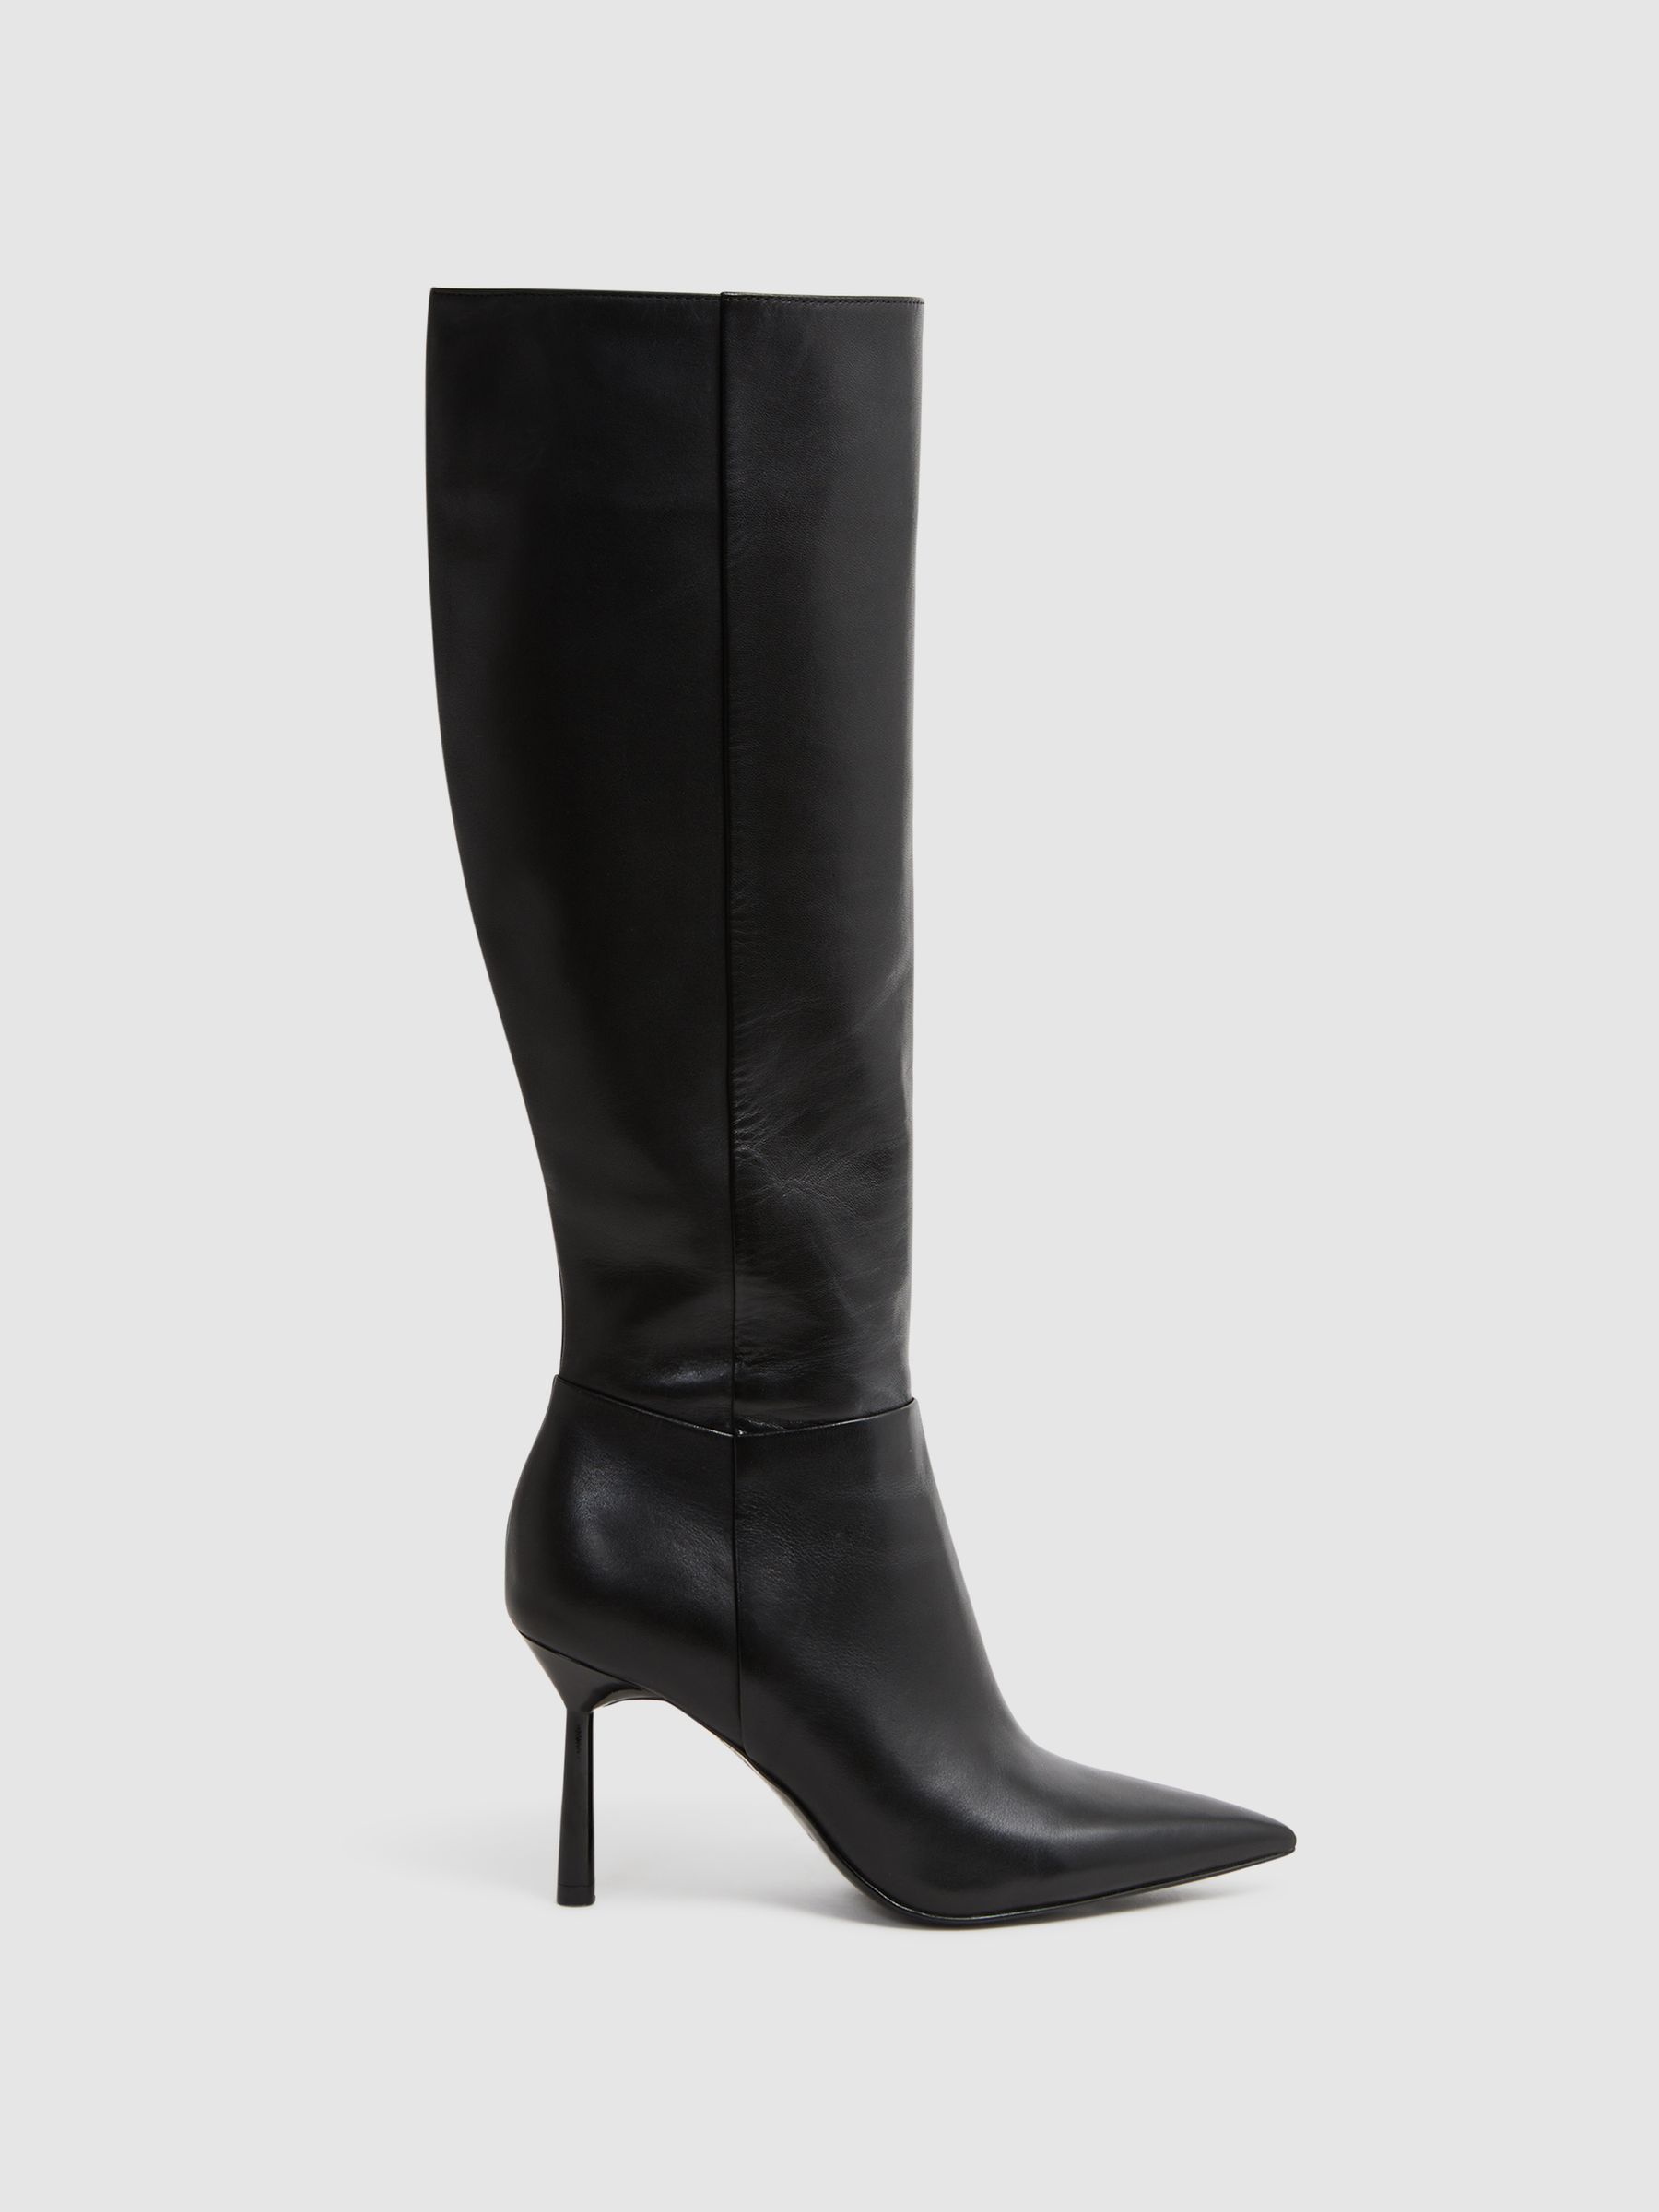 Reiss Gracyn Leather Knee High Heeled Boots | REISS USA